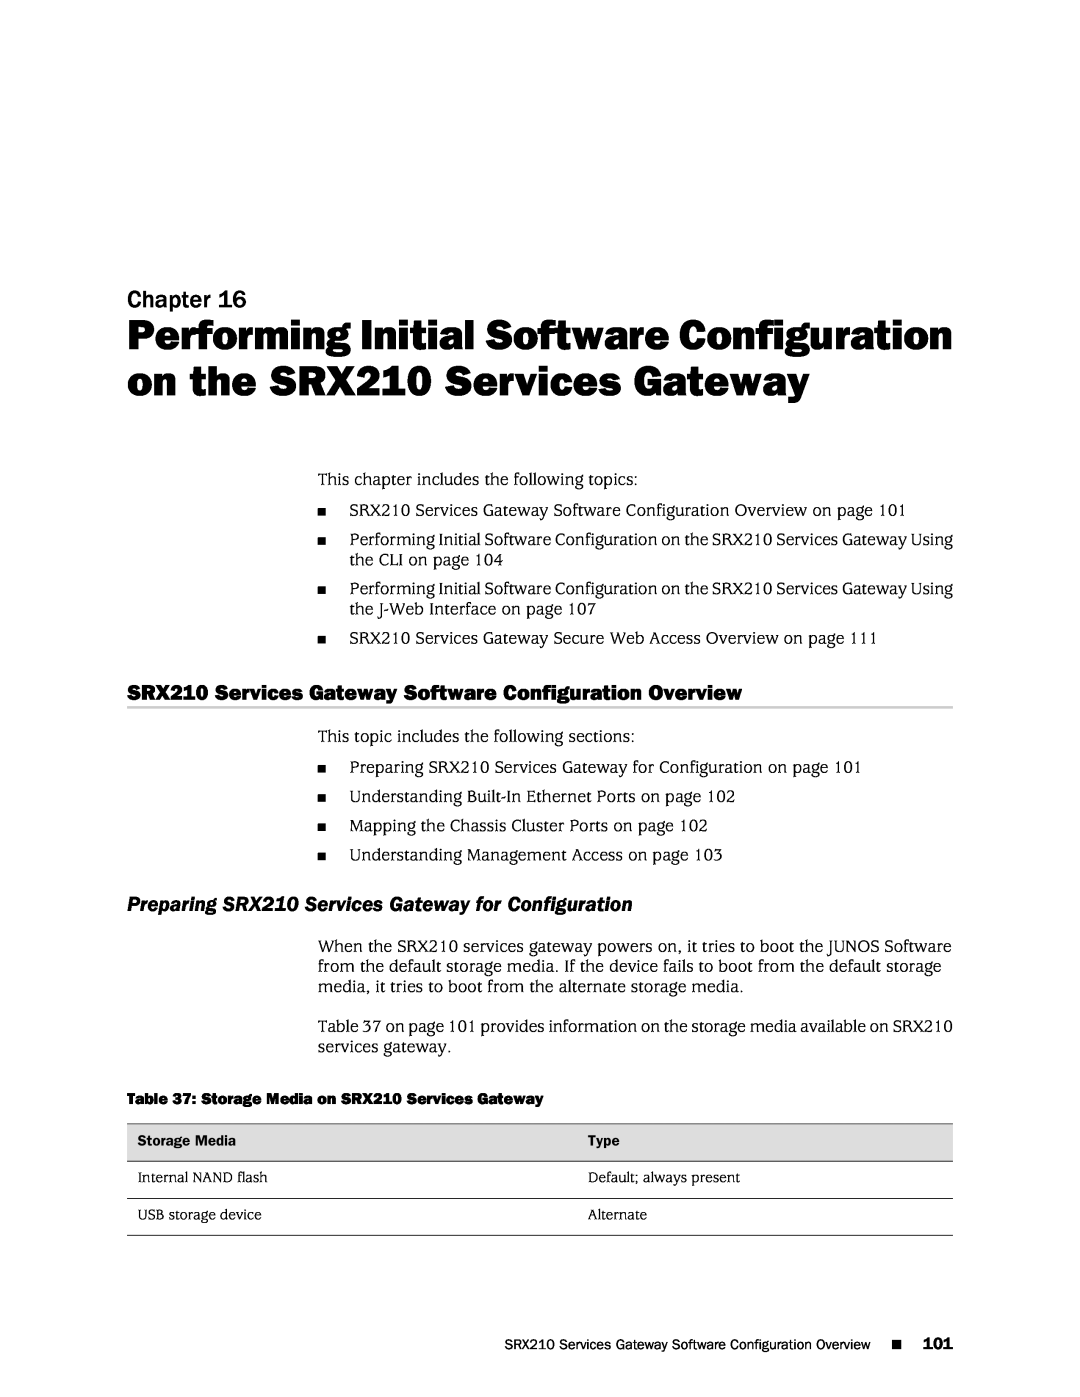 Juniper Networks SRX 210 manual SRX210 Services Gateway Software Configuration Overview, Chapter 